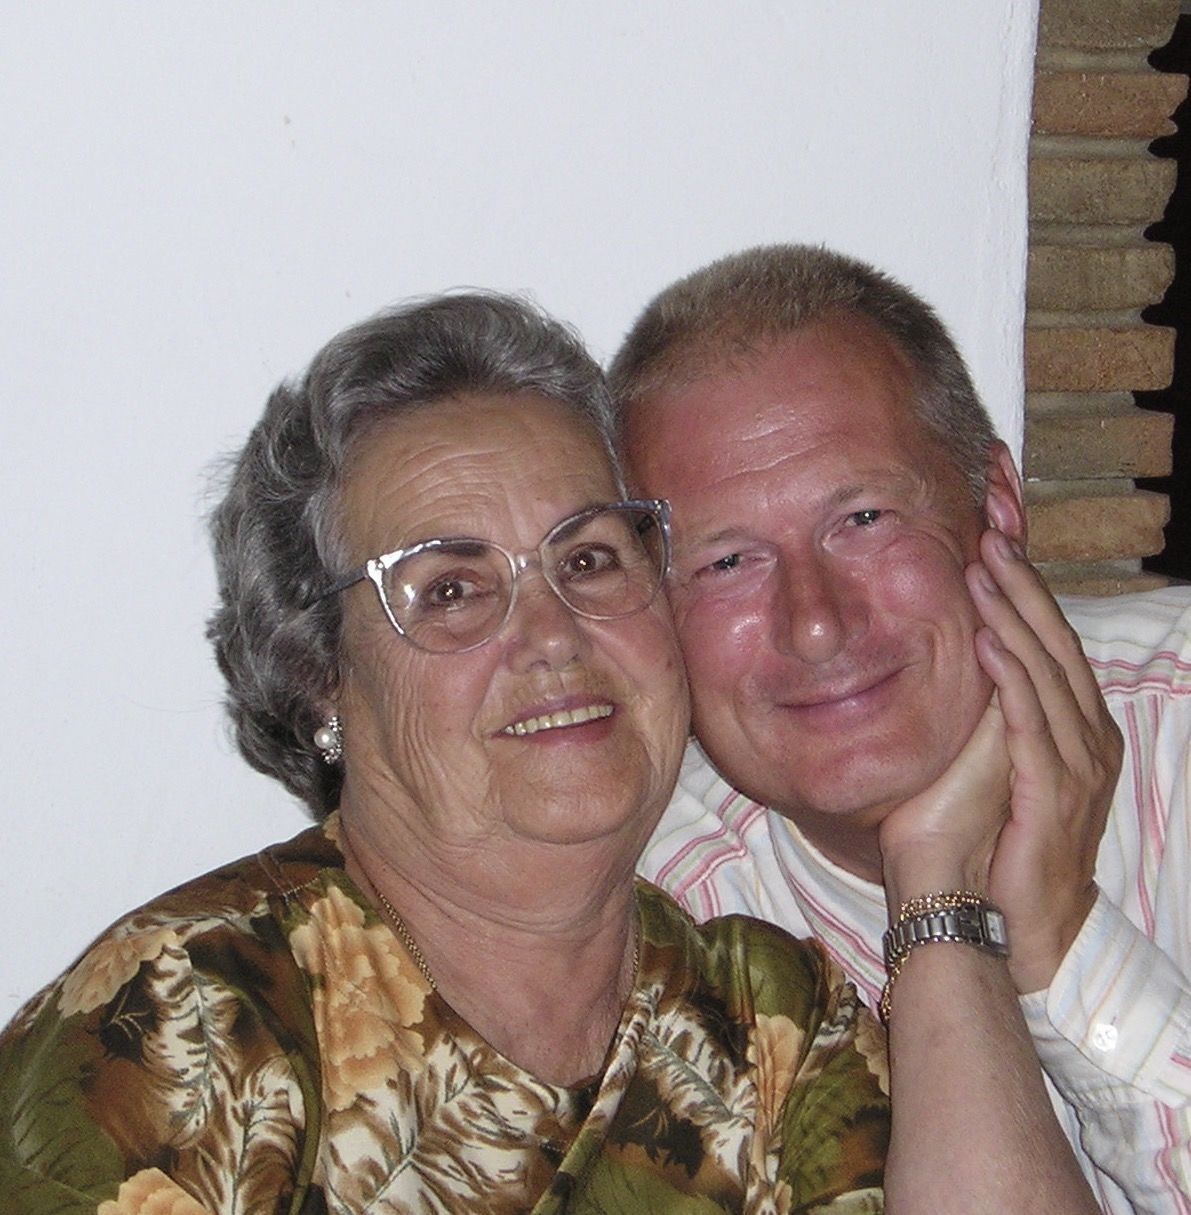 Catarina with Peter Catarina, along with her husband Jorge, own the Flor da Serra Cafe